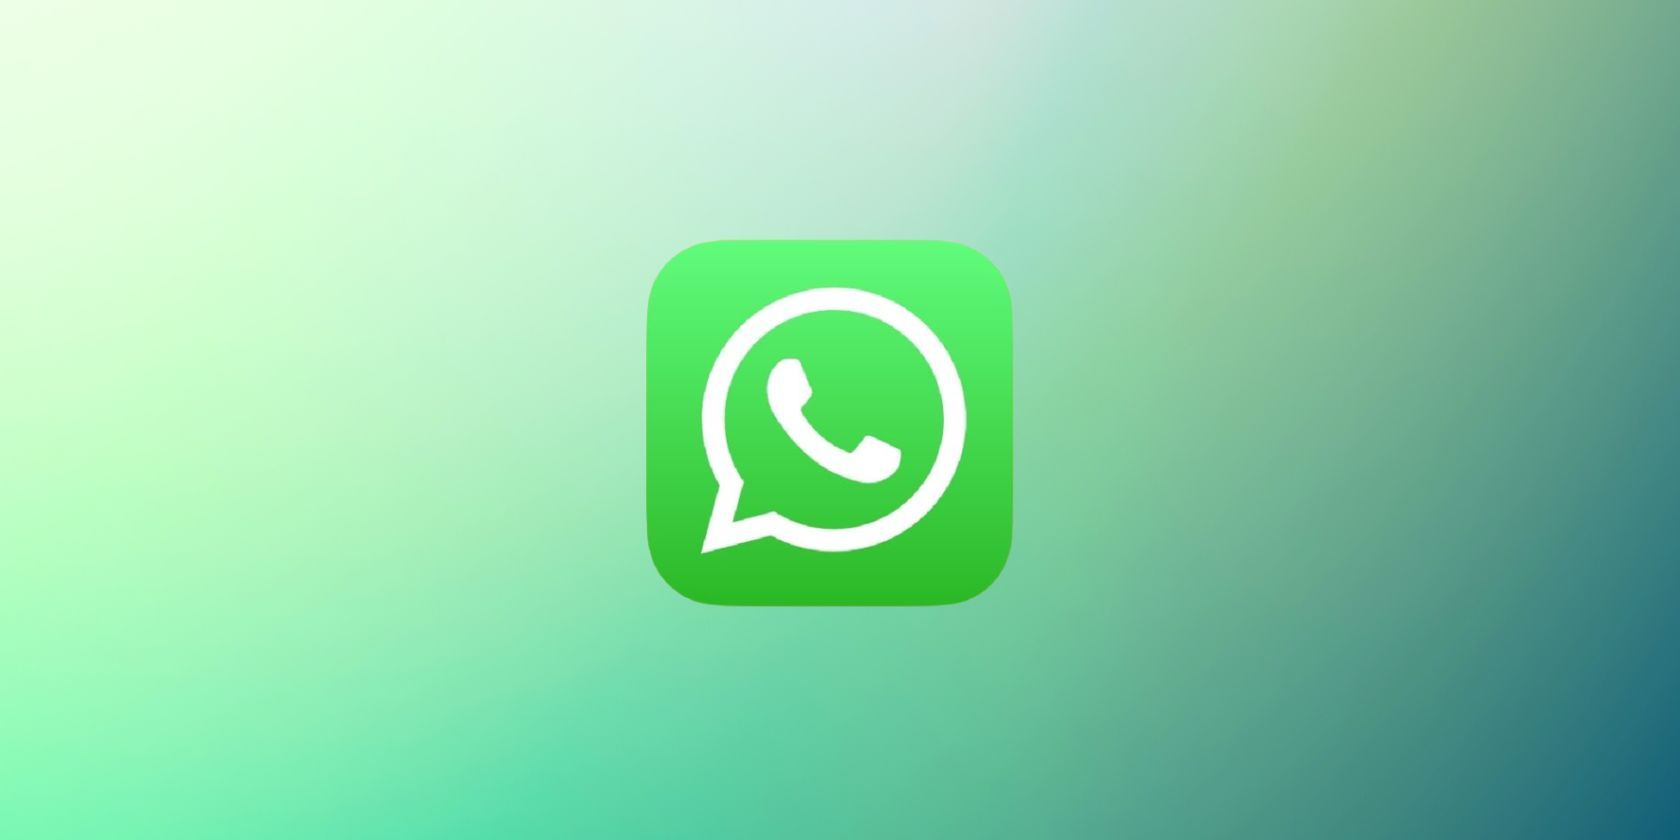 WhatsApp logo on green background